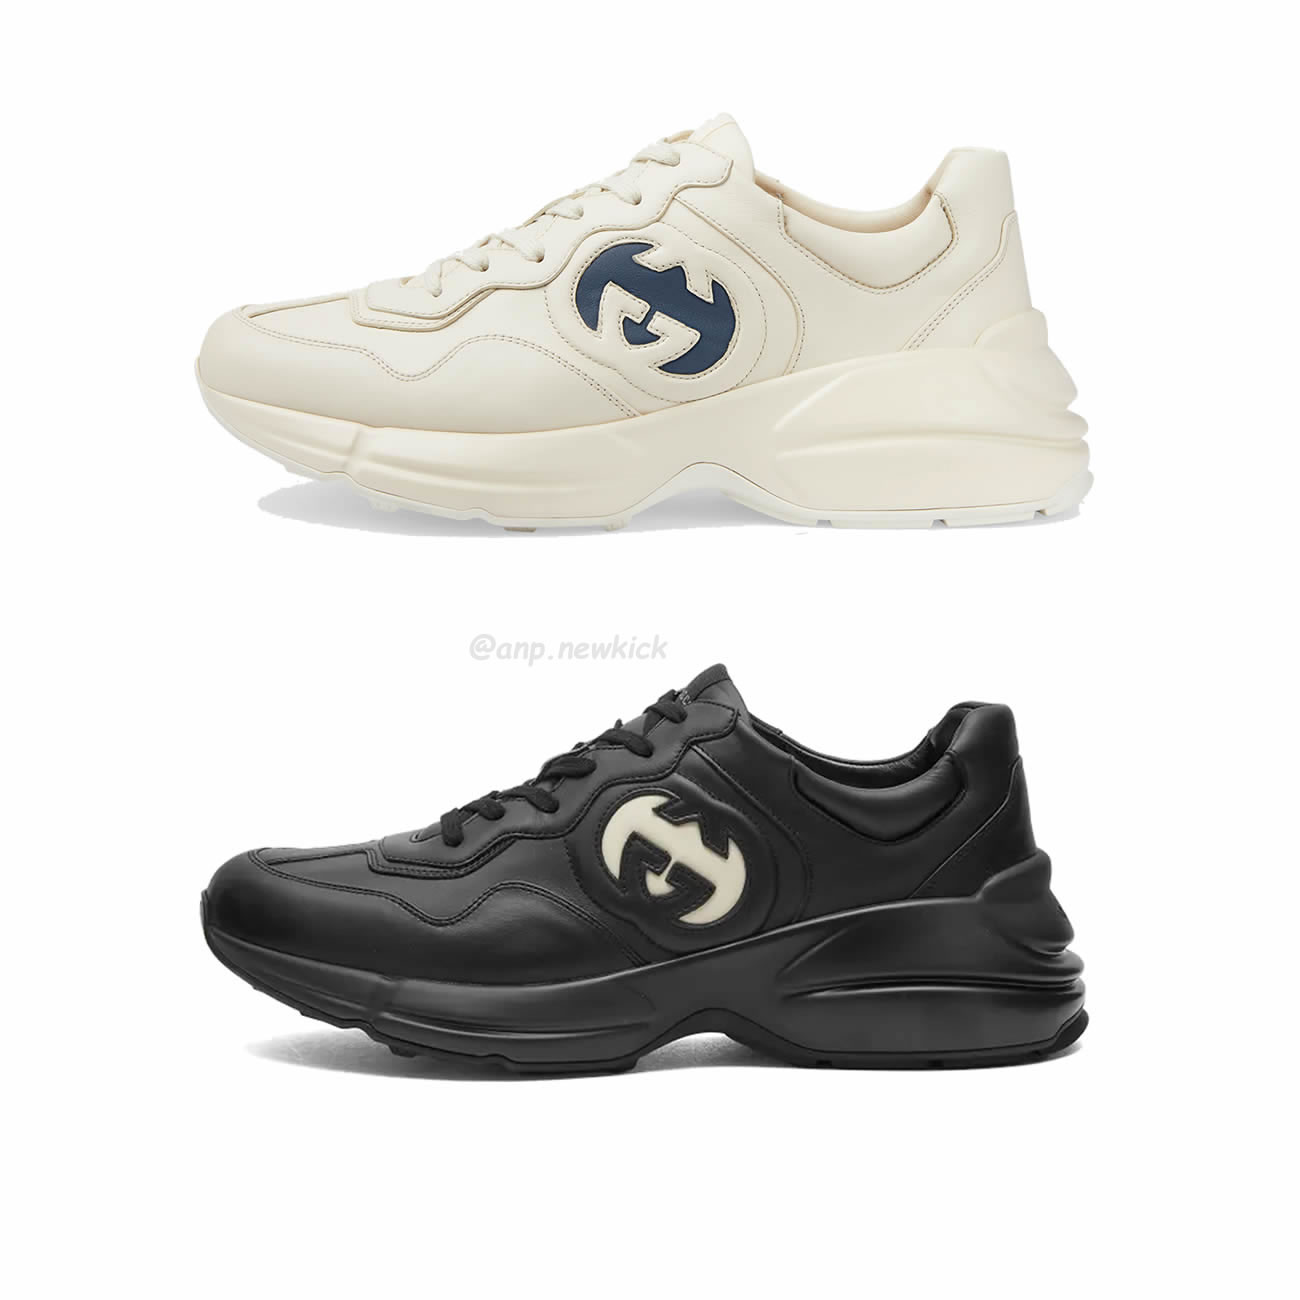 Gucci Rhyton Interlocking G Sneaker Black White 757857 Upg70 9567 (1) - newkick.org